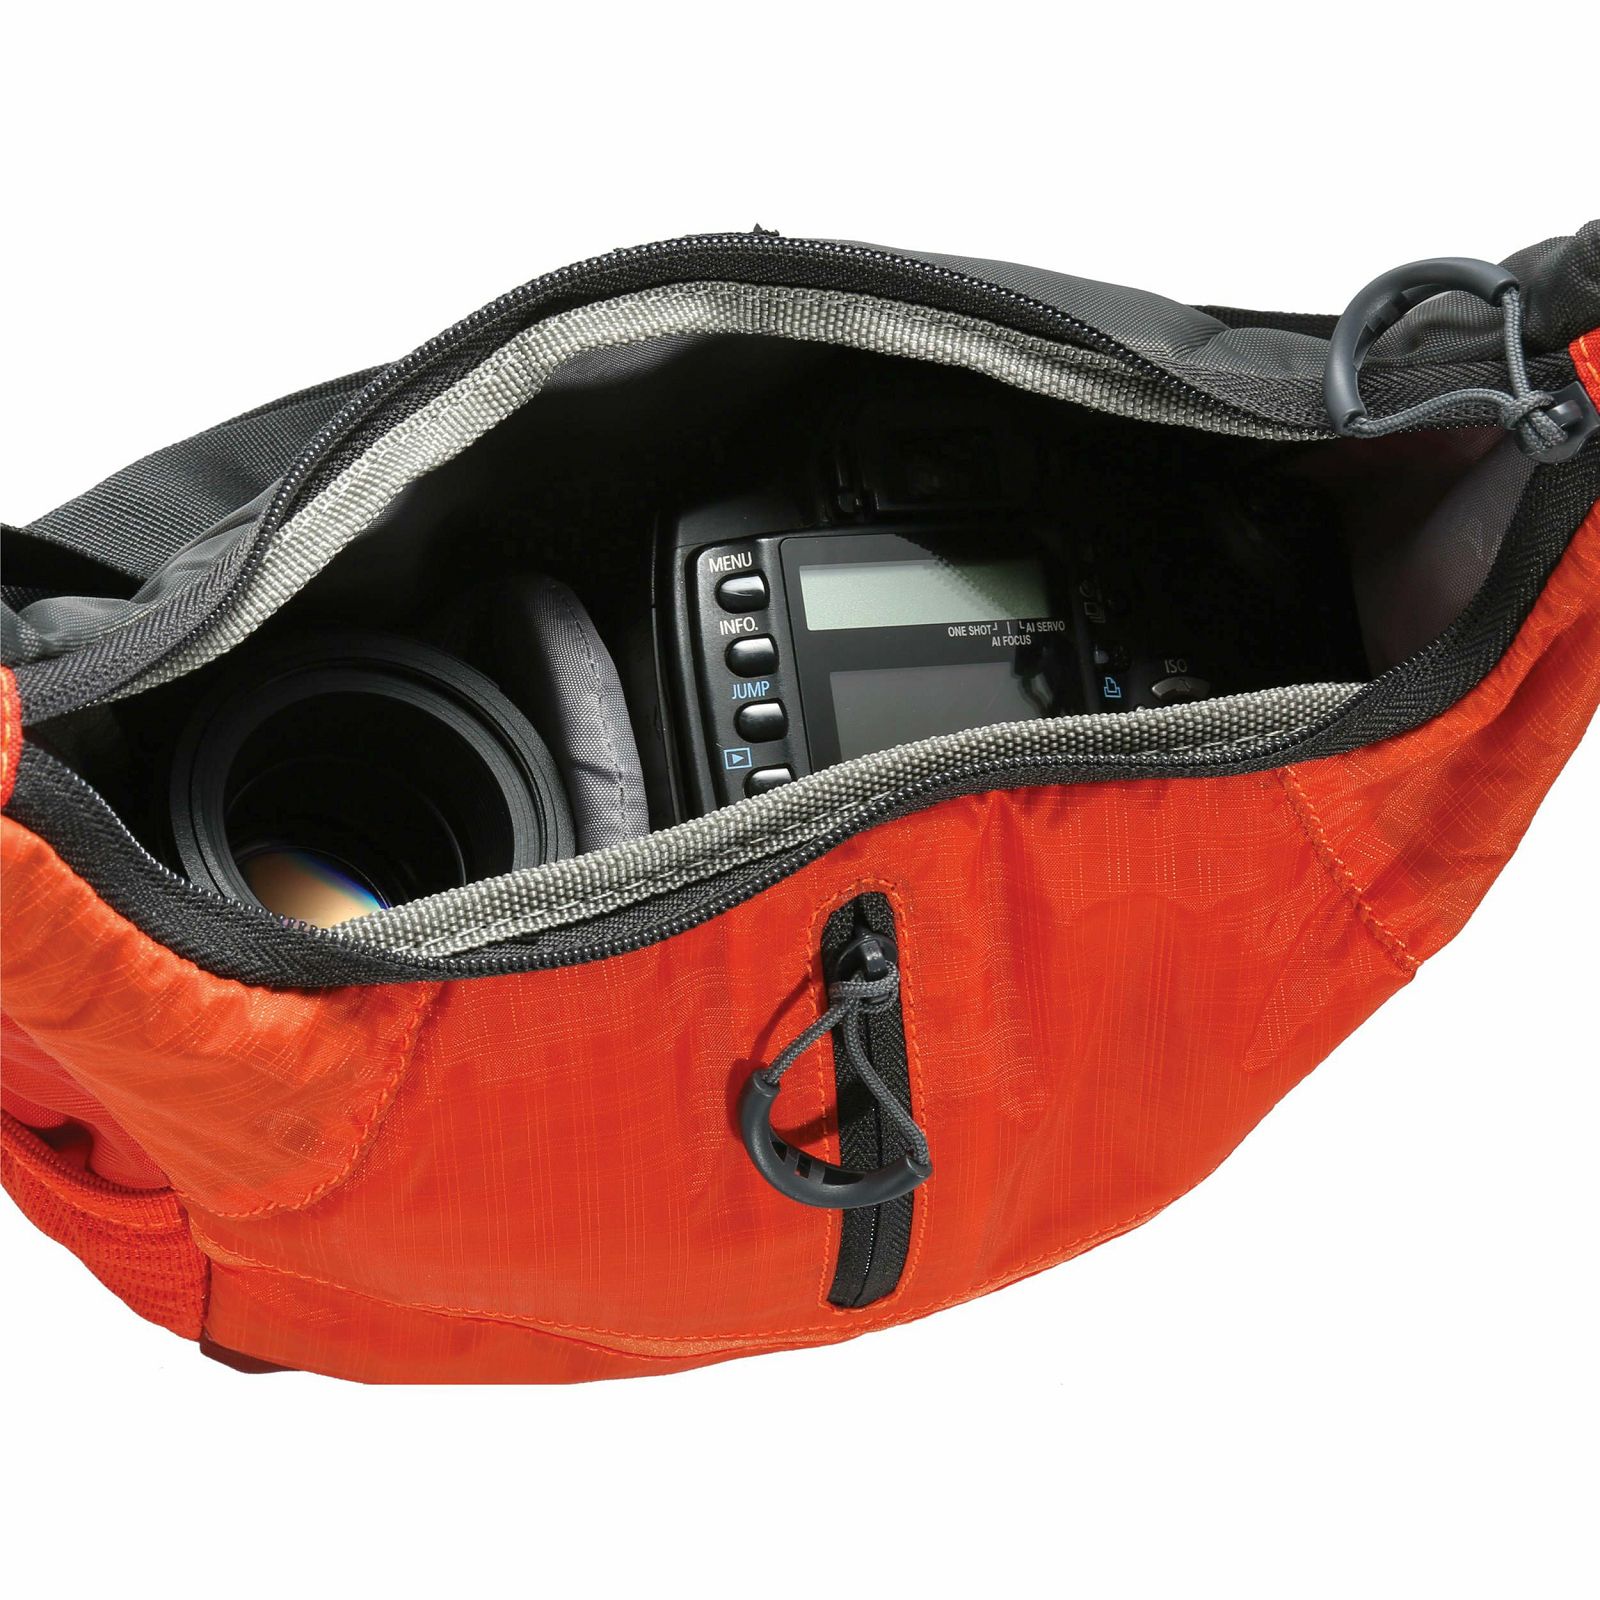 Vanguard Reno 22 Shoulder Bag (Orange) DSLR fotografska foto torba